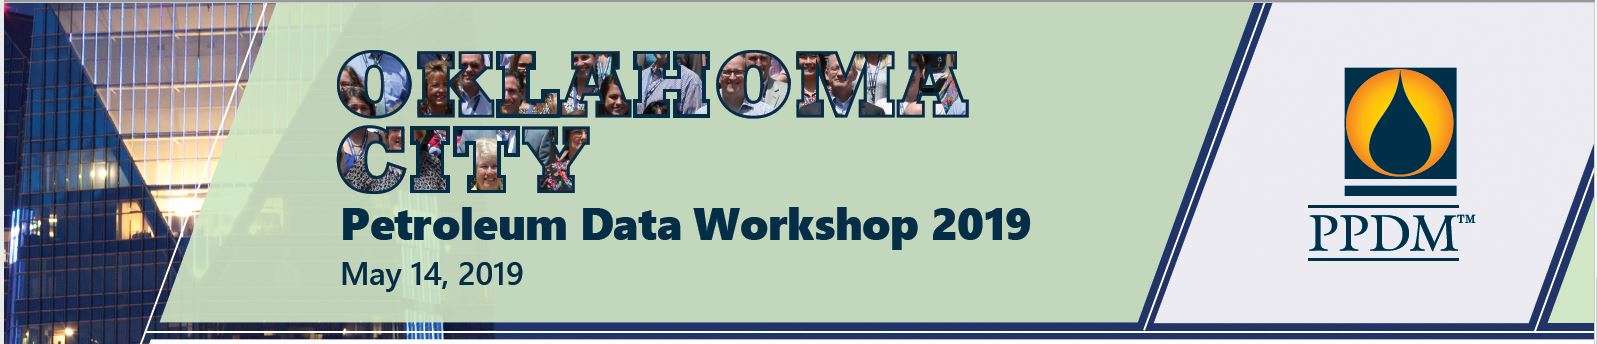 PPDM Oklahoma City Petroleum Data Workshop 2019